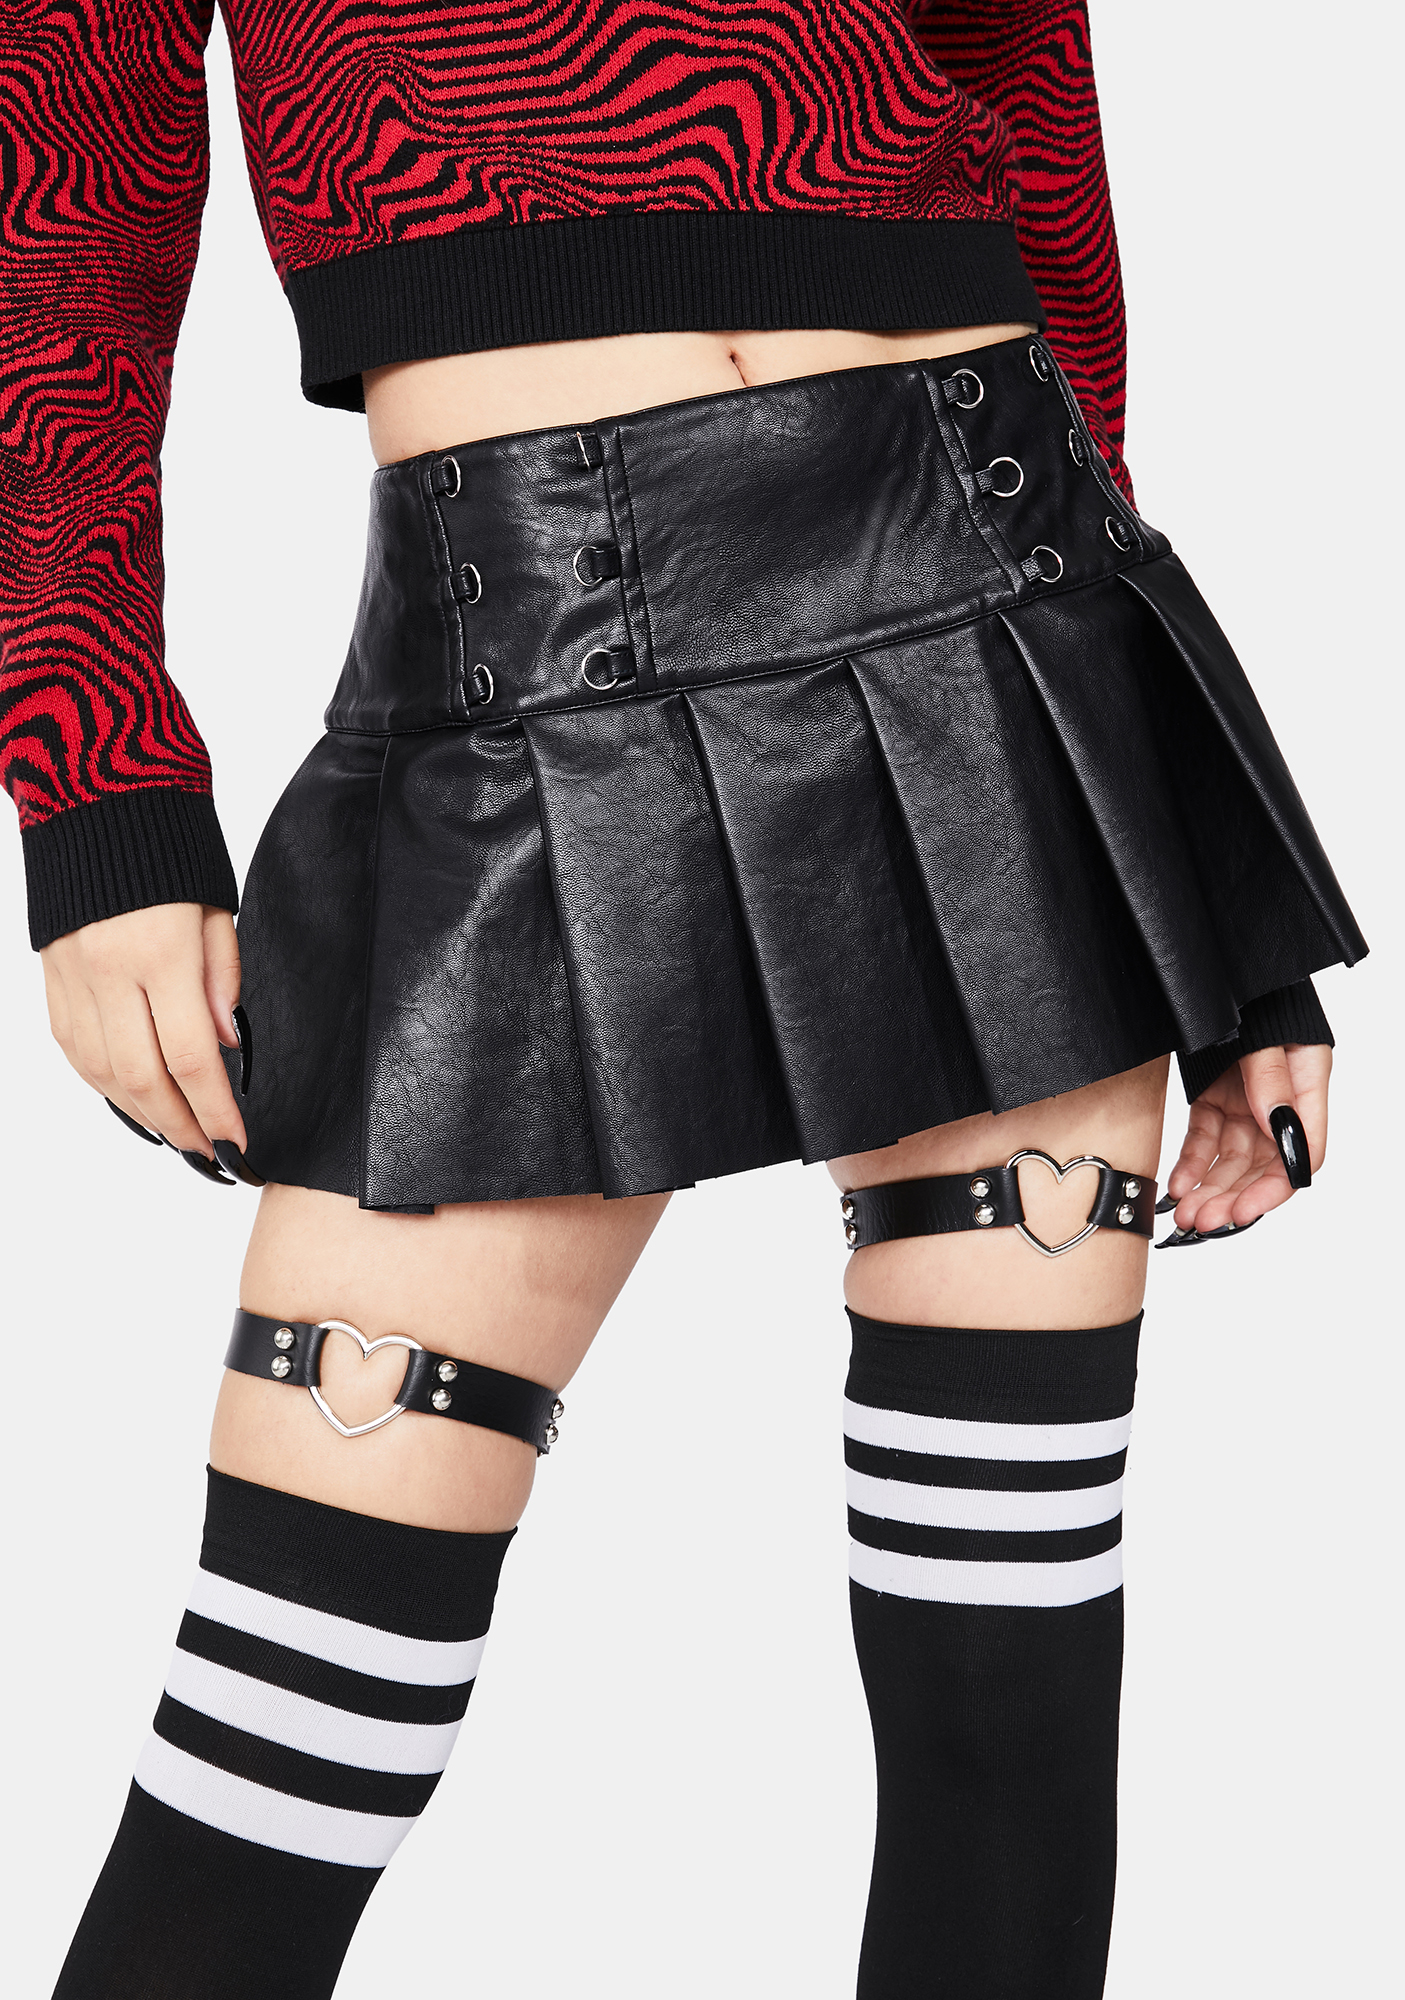 Heart Ring Faux Leather Garter Set - Black | Dolls Kill